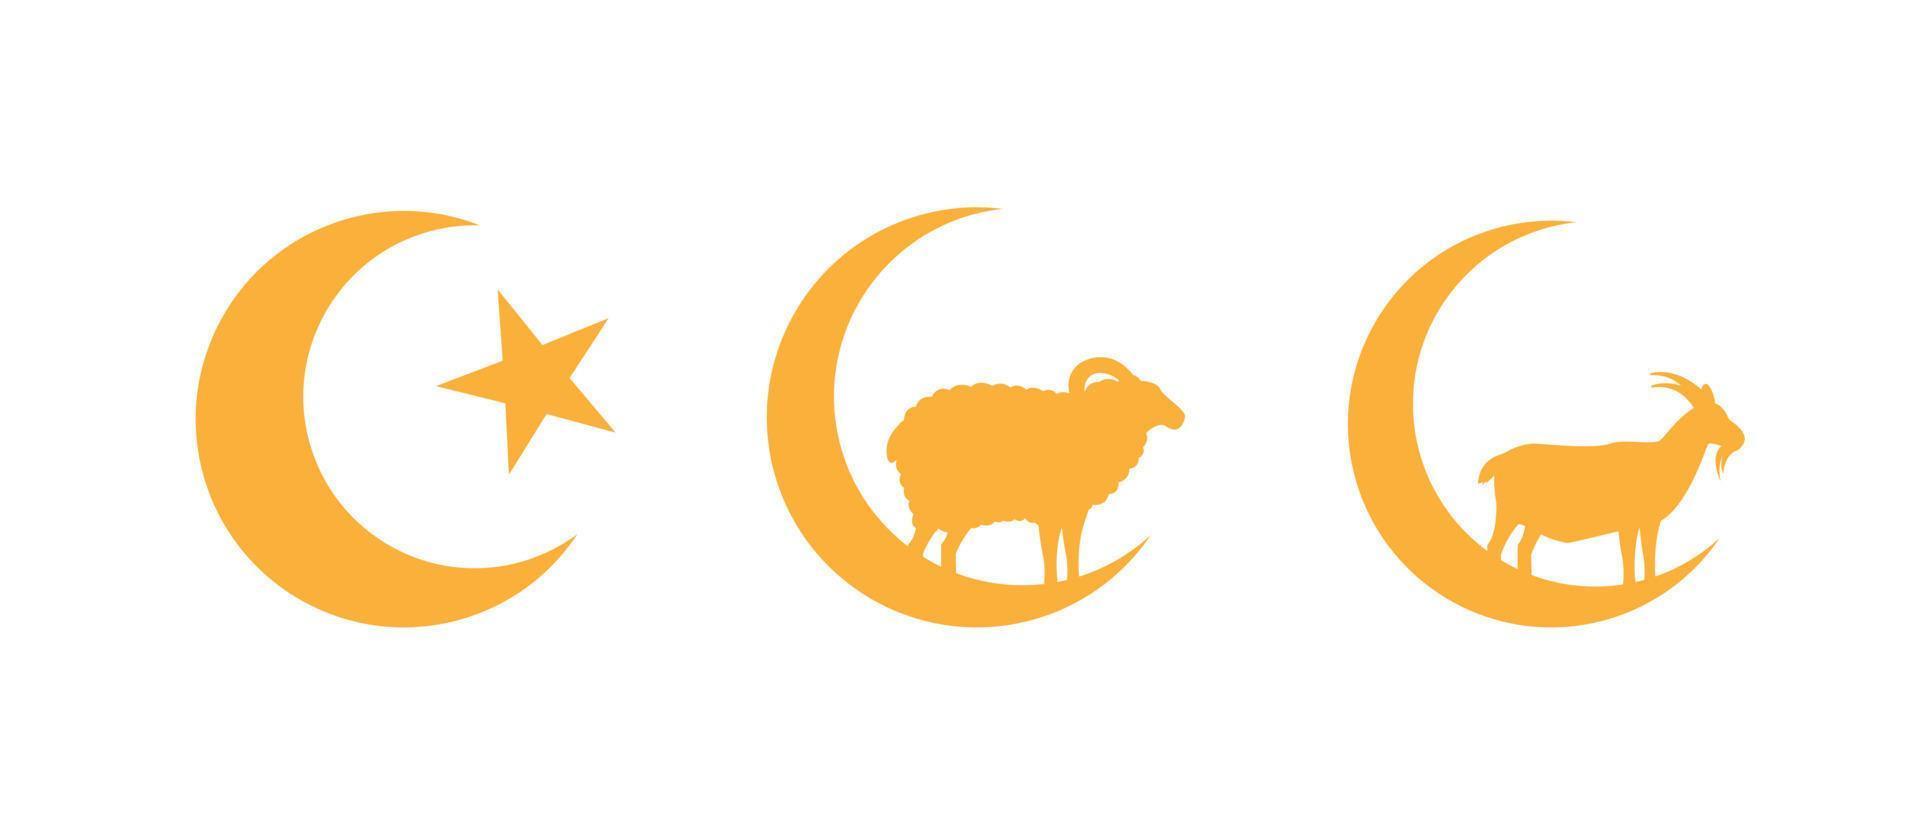 Eid al-Adha, Eid ul-Adha mubarak. Kurban Bayrami, Kurban Bajram muslim festival icons. vector